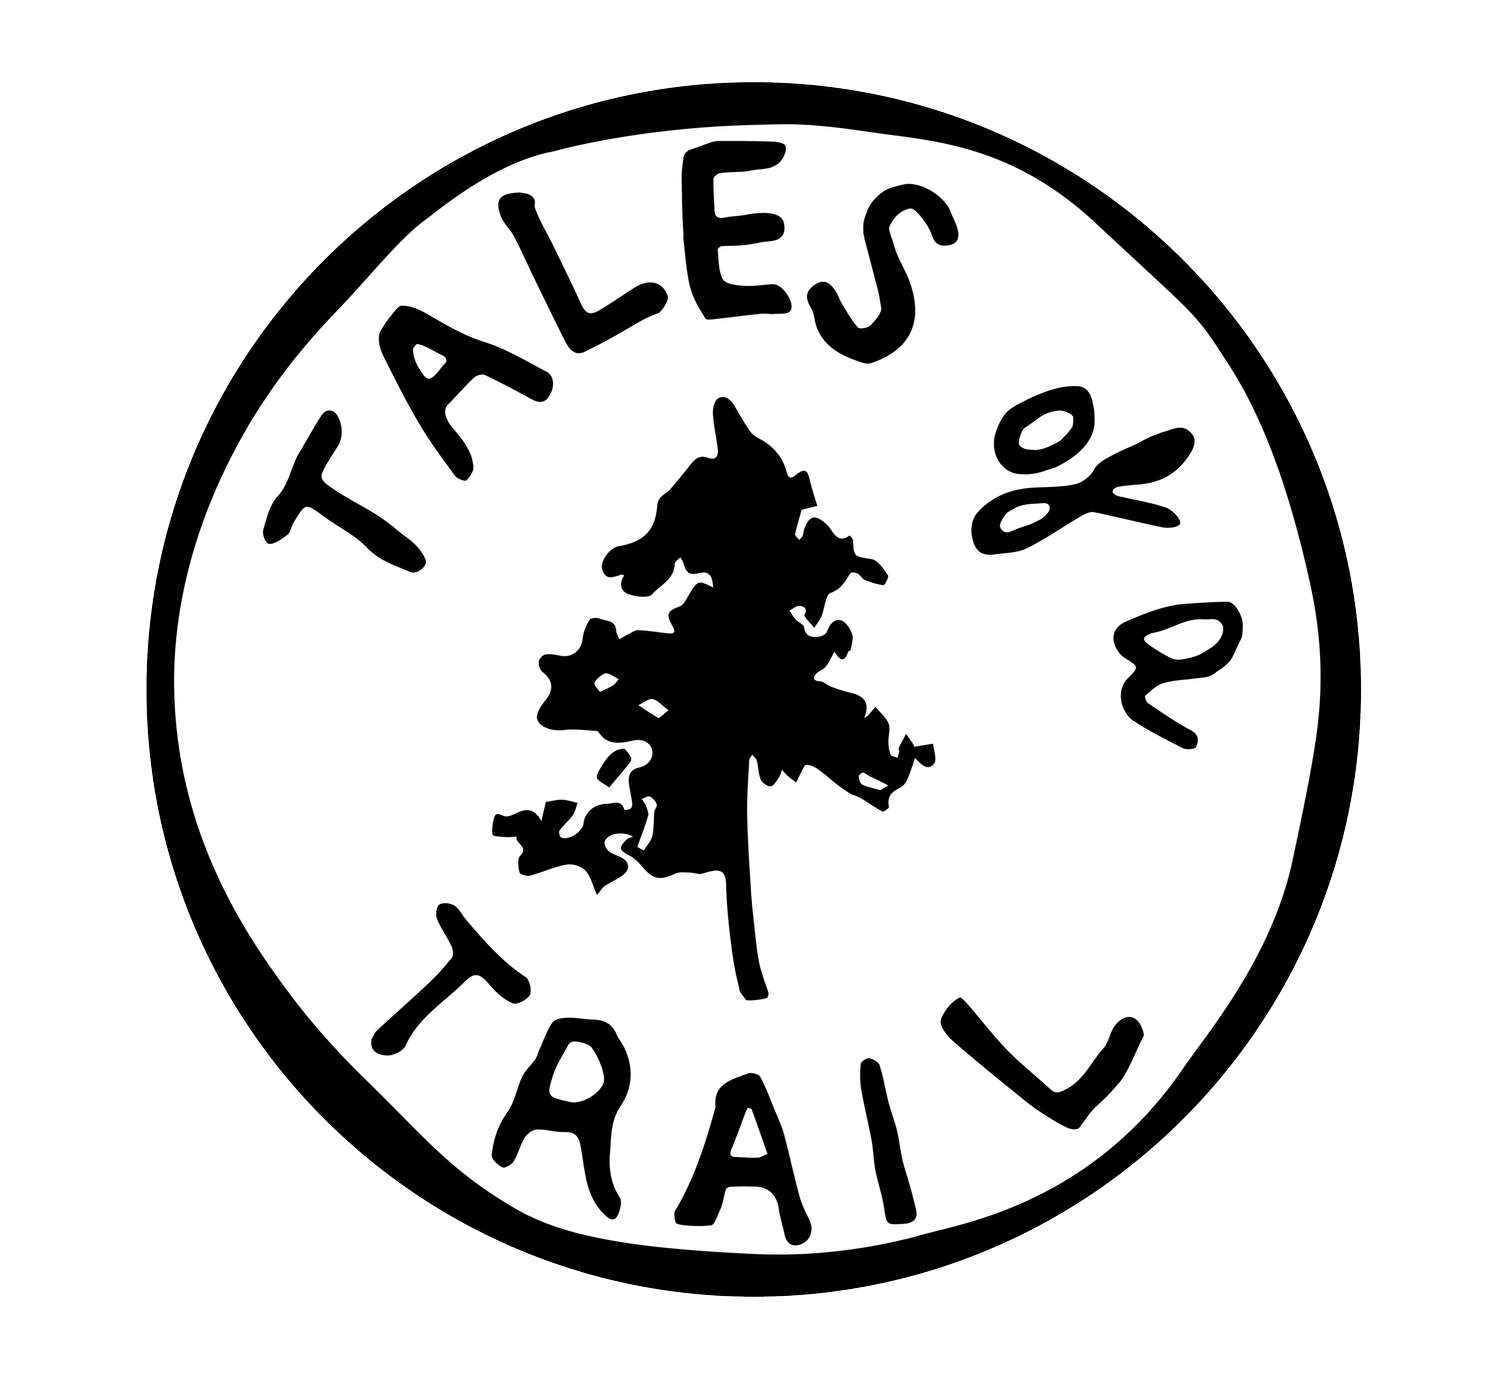 TALES OF A TRAIL